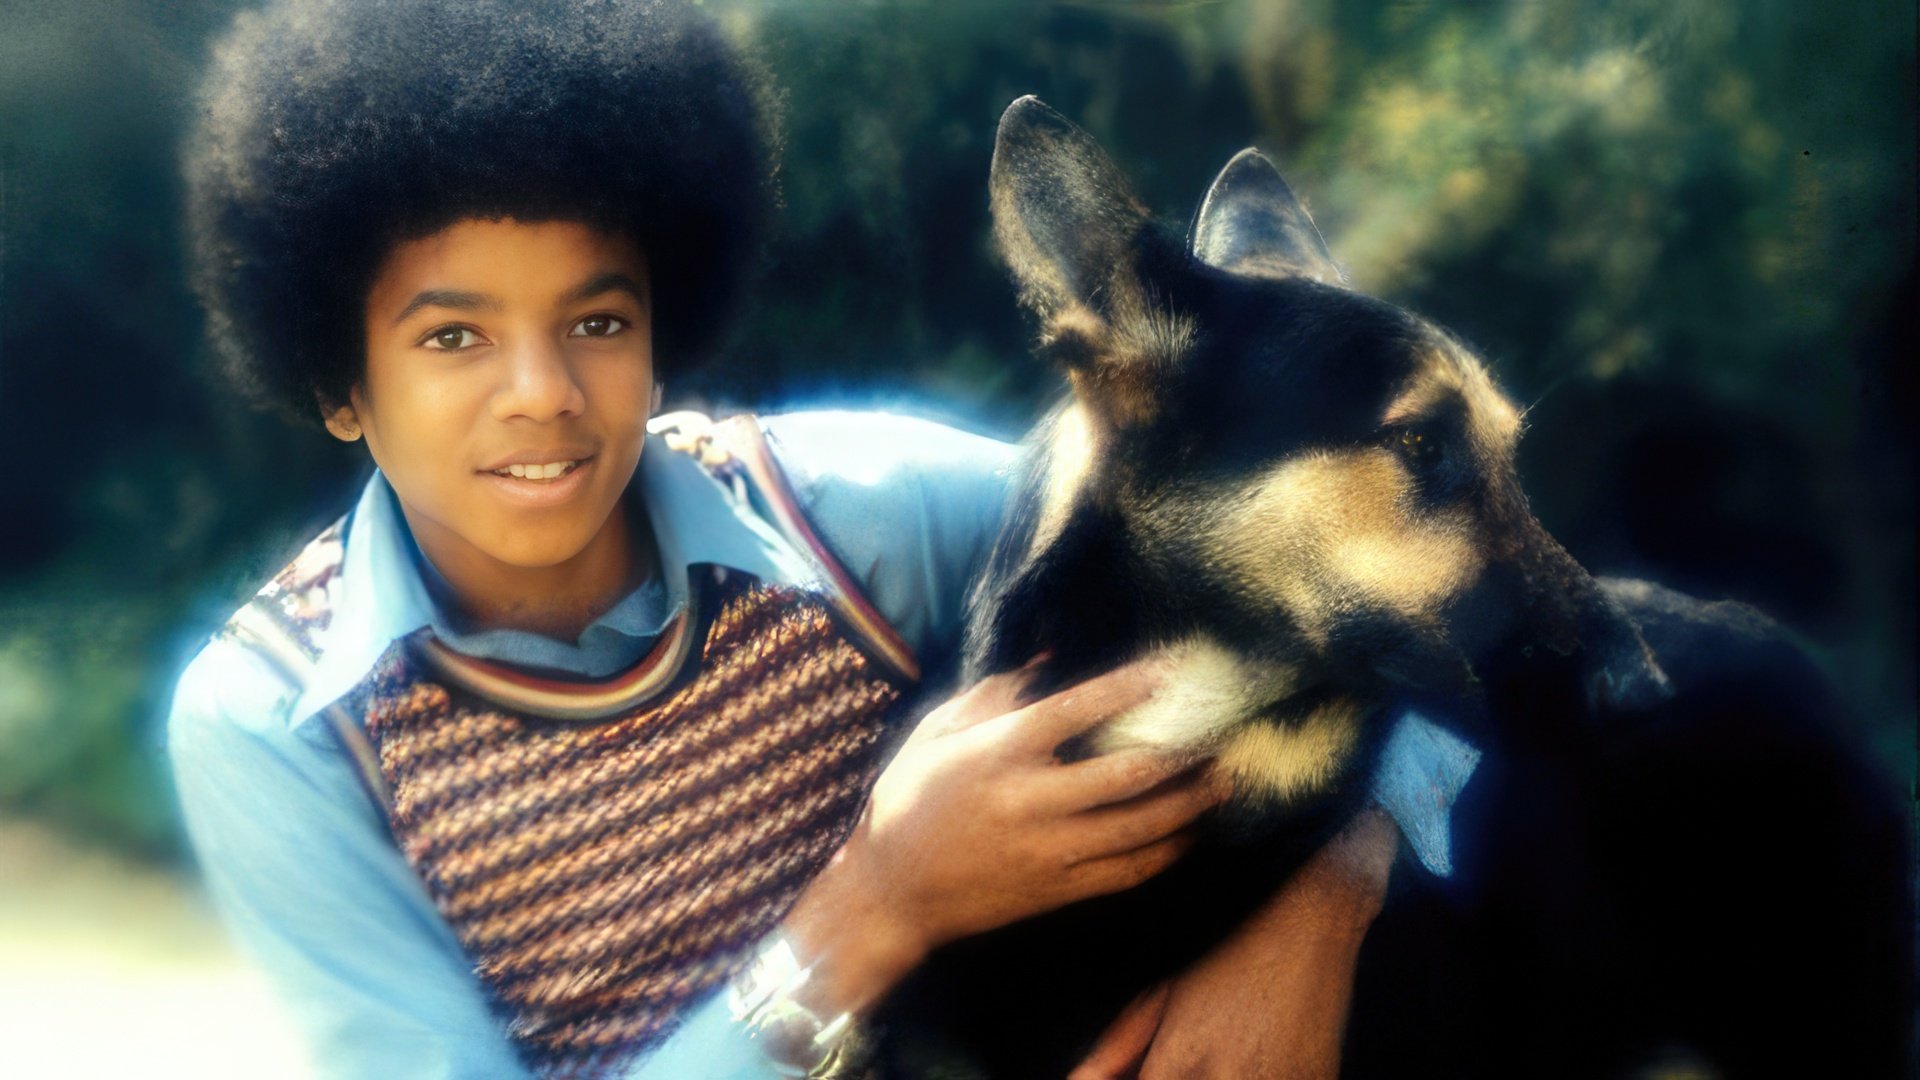 Michael Jackson in his childhood